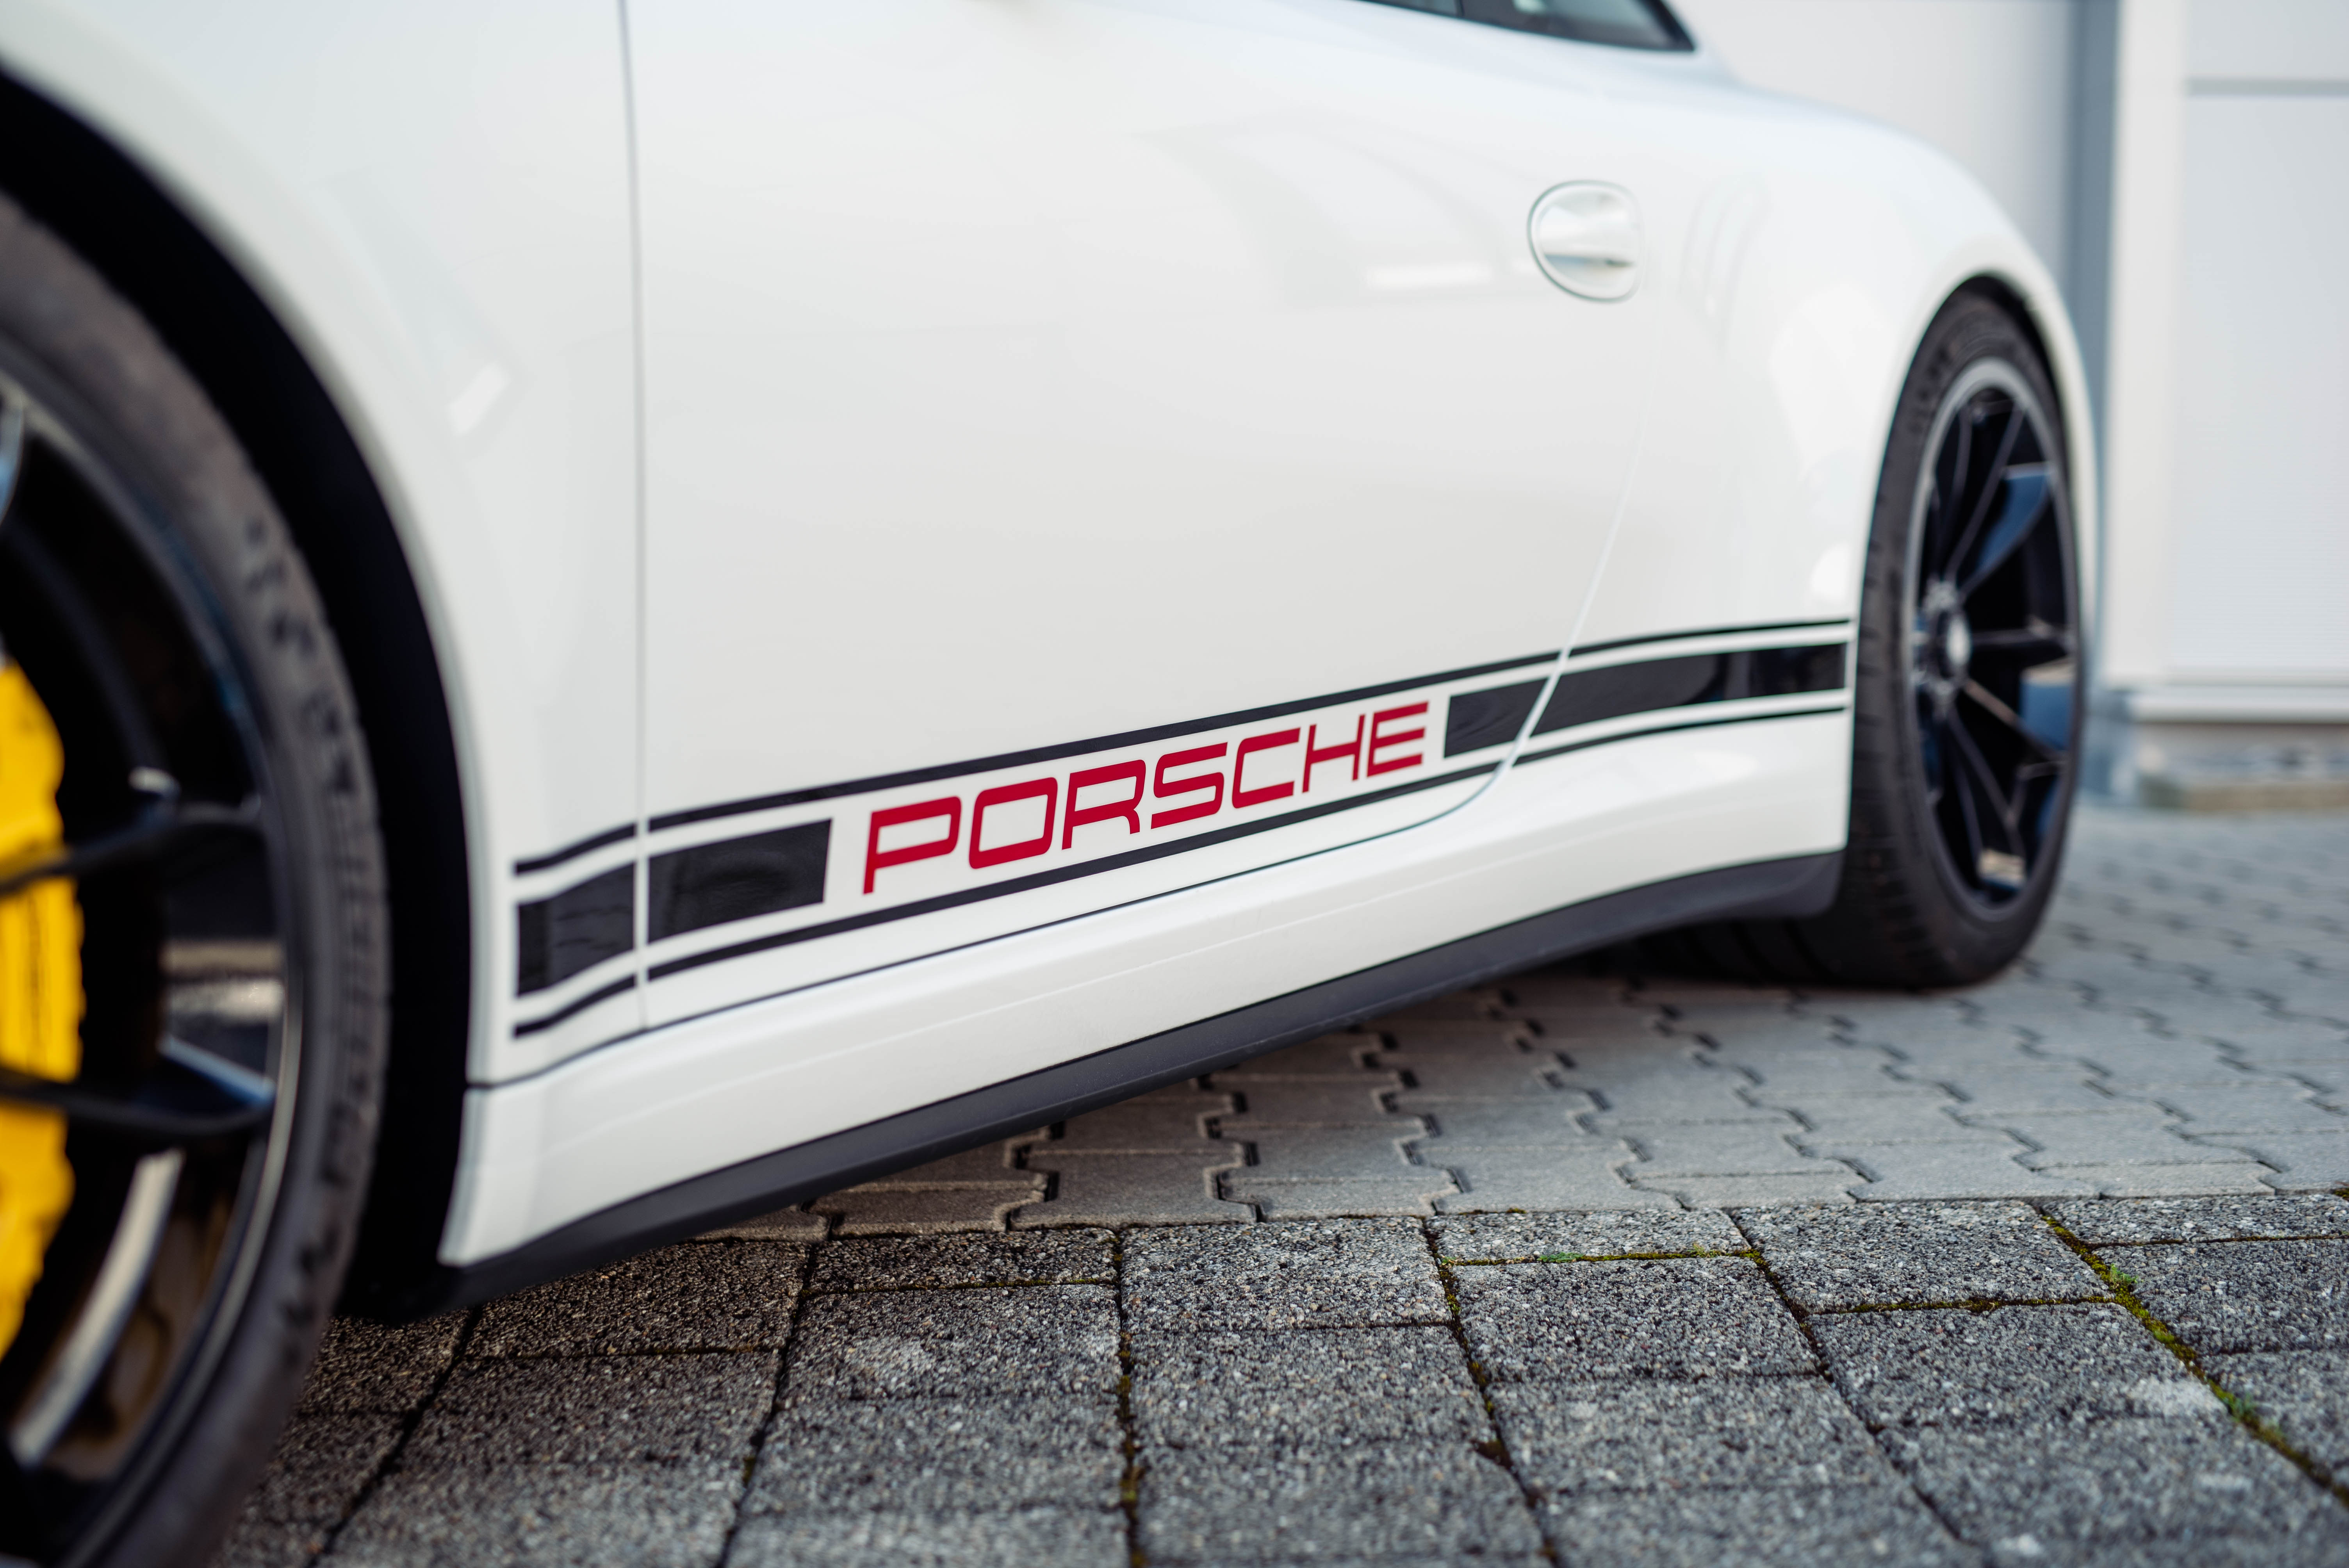 Porsche 911 R - Stimpfig Automobile GmbH - Germany - For sale on ...